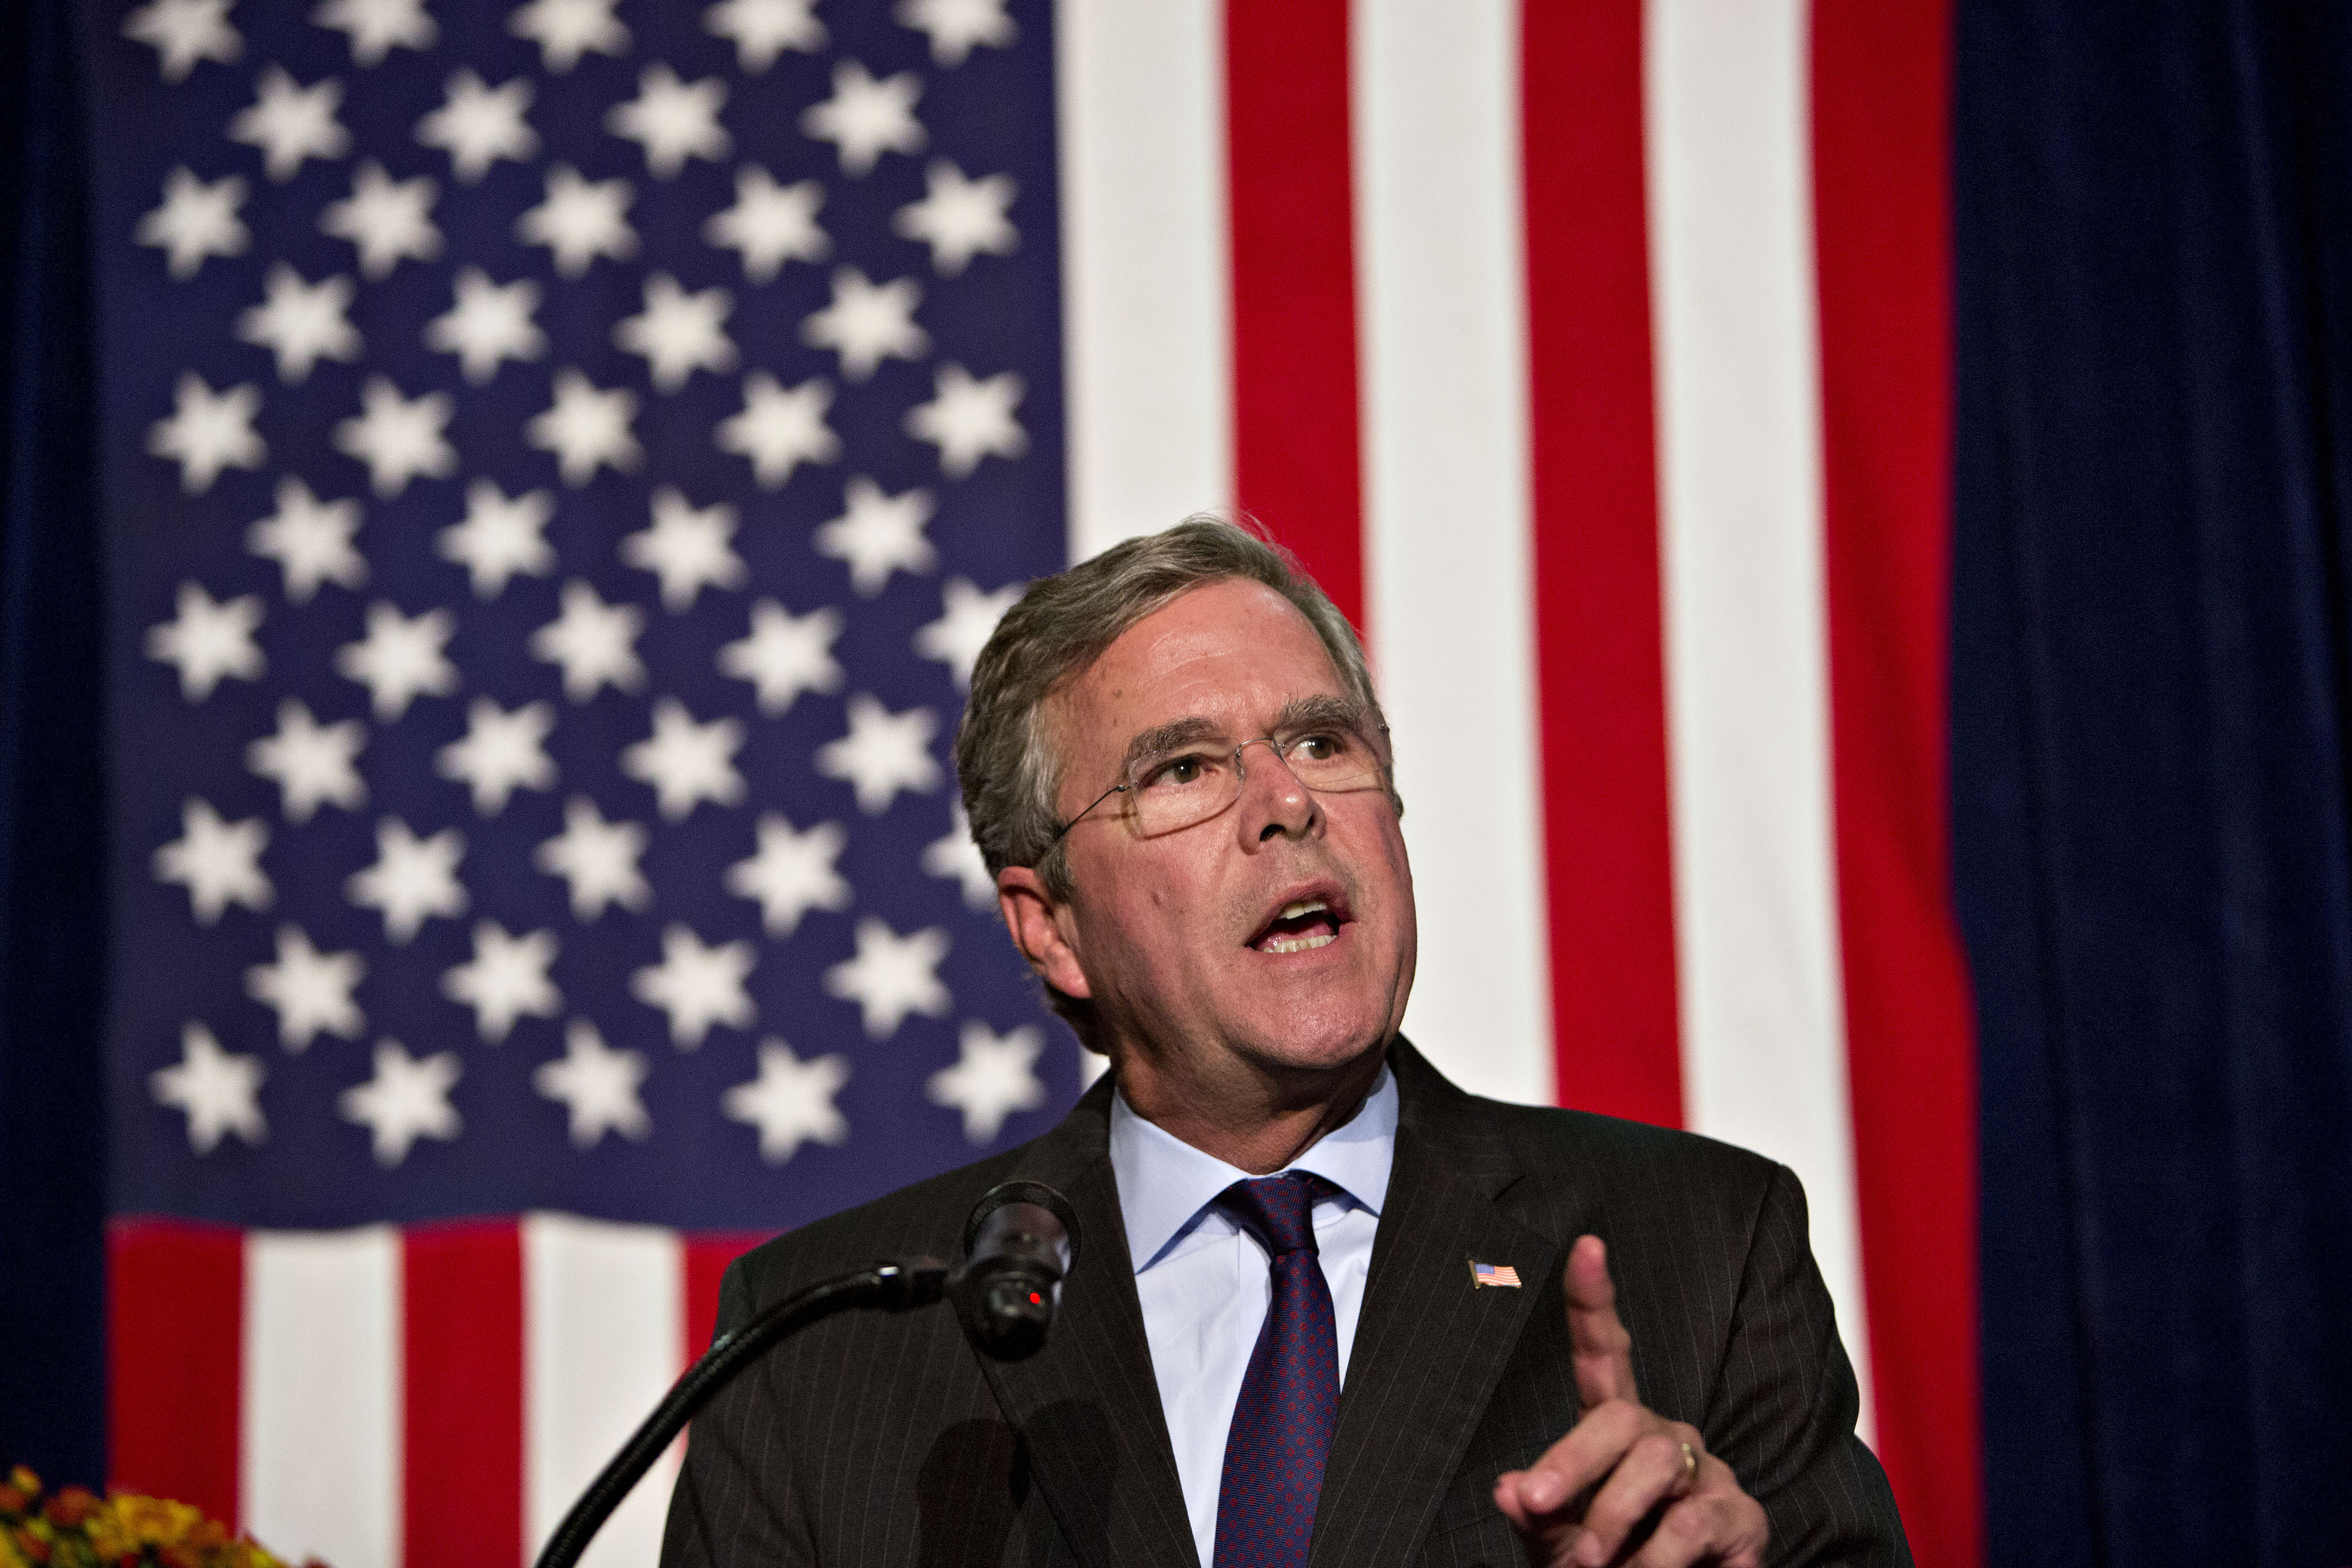 Jeb Bush on Oct. 6, 2015 in Davenport, Iowa. (Daniel Acker—Bloomberg/Getty Images)